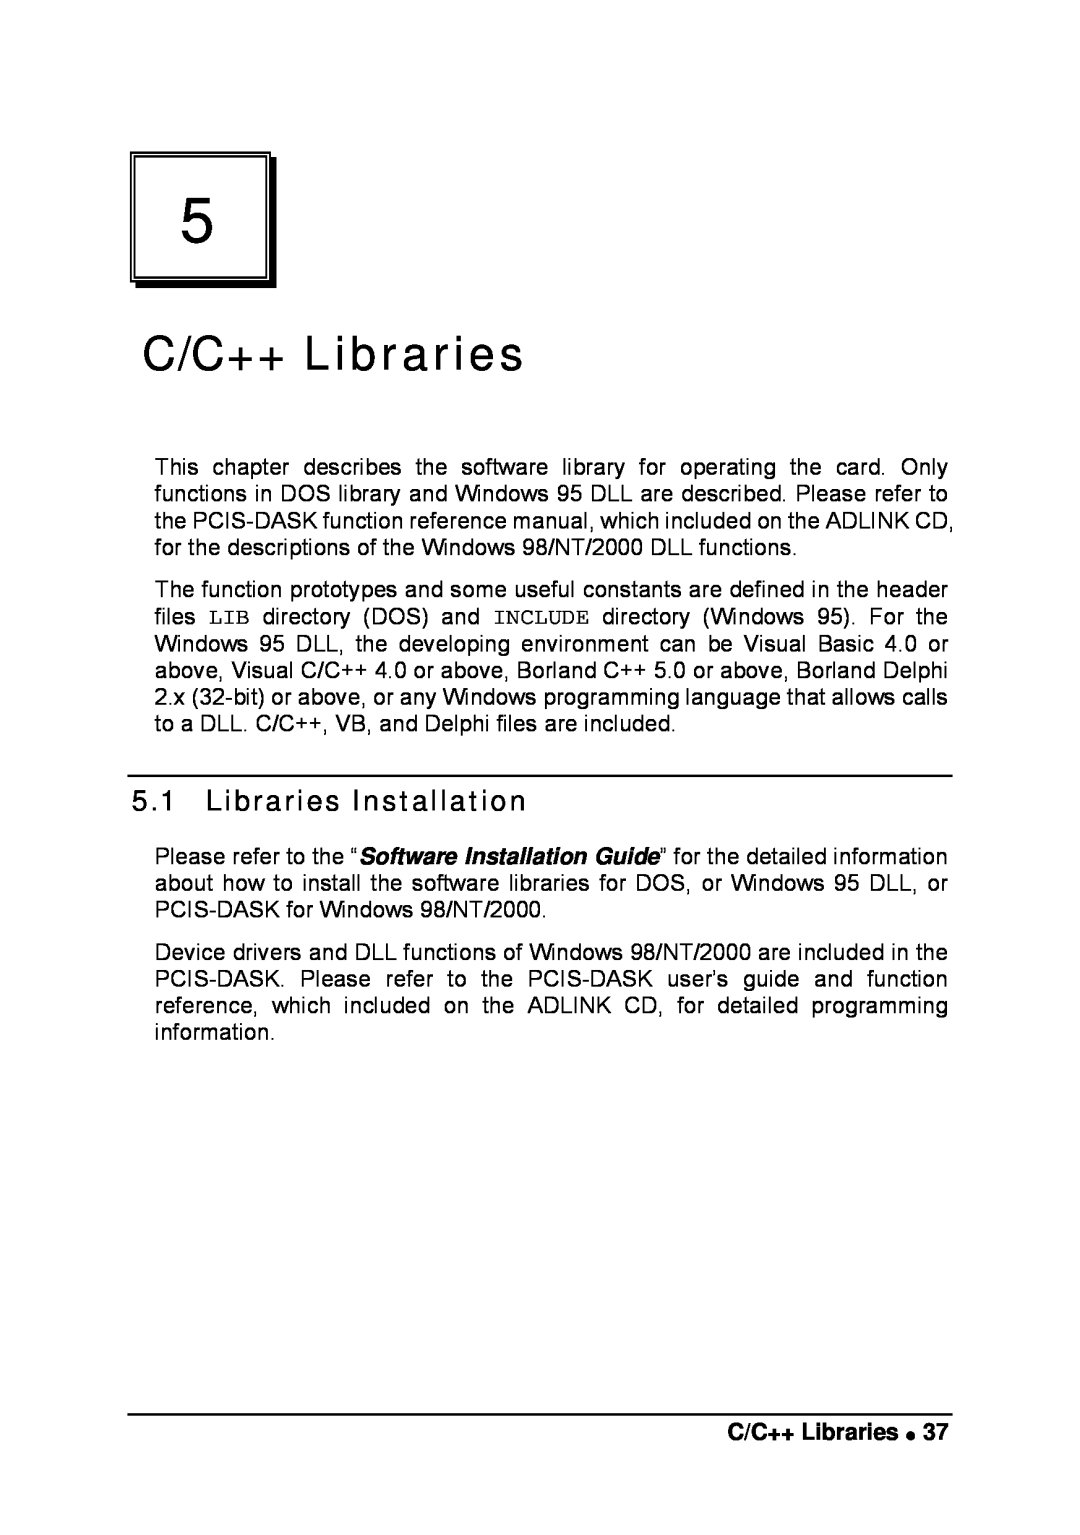 Intel LPCI-7200S manual C/C++ Libraries, Libraries Installation 